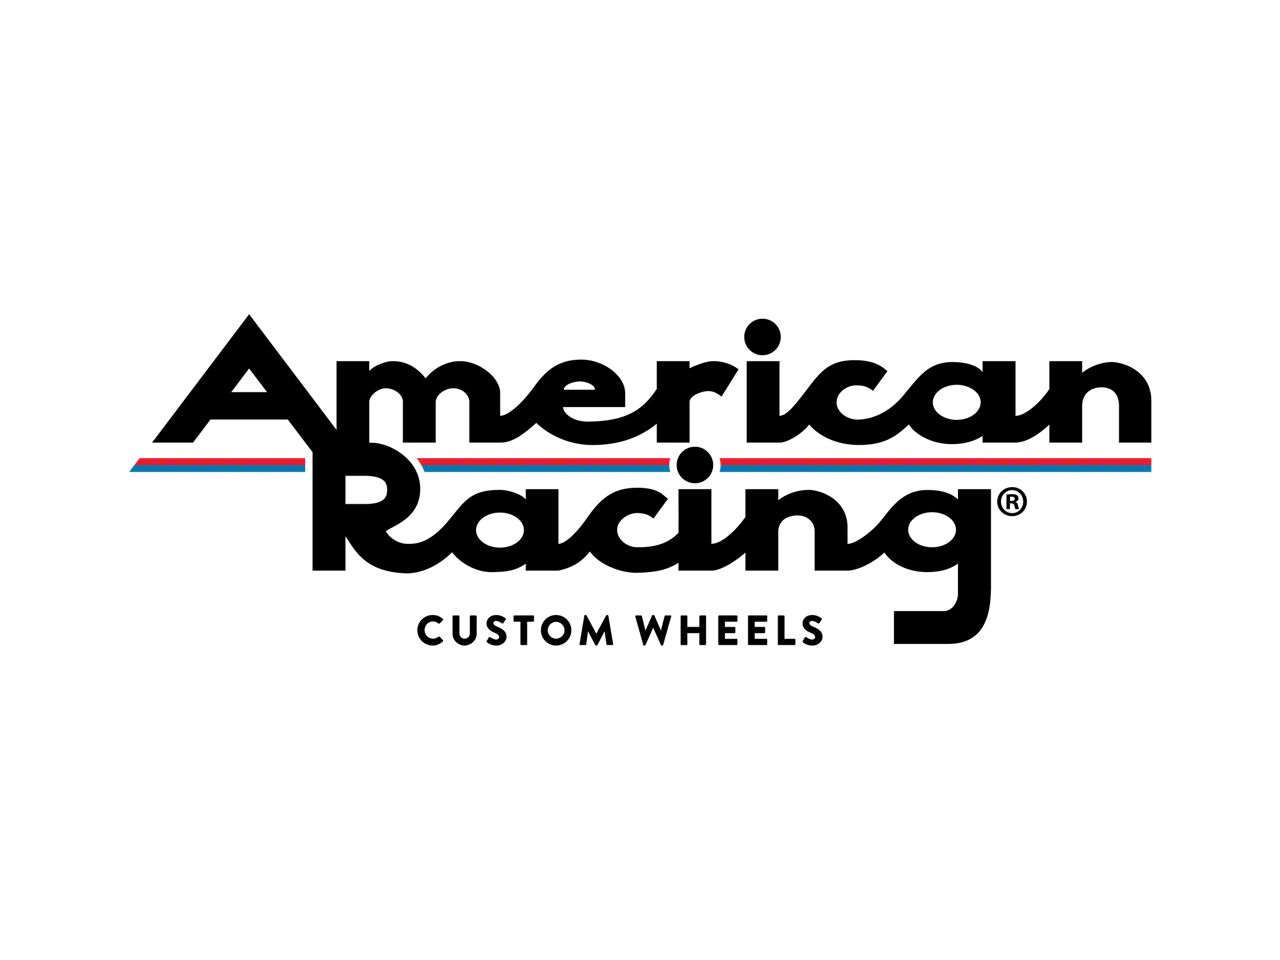 American Racing Wheels & Rims